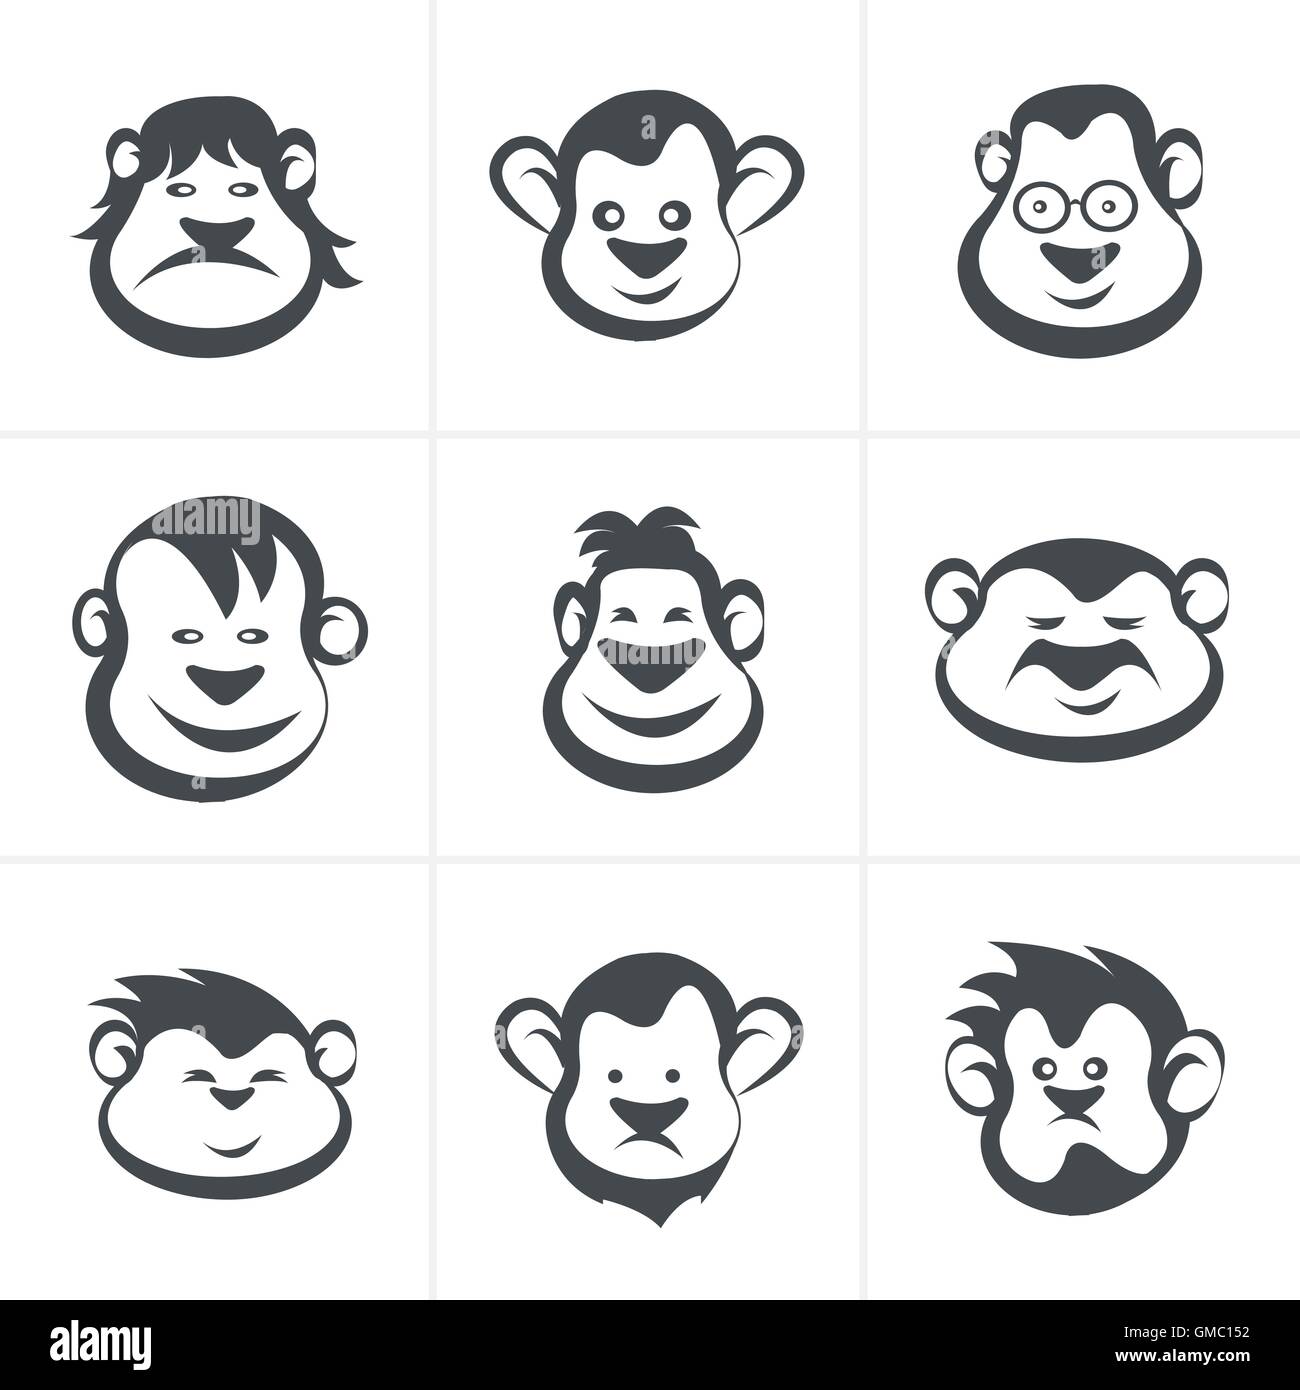 Monkey head icon vector Stock Vector